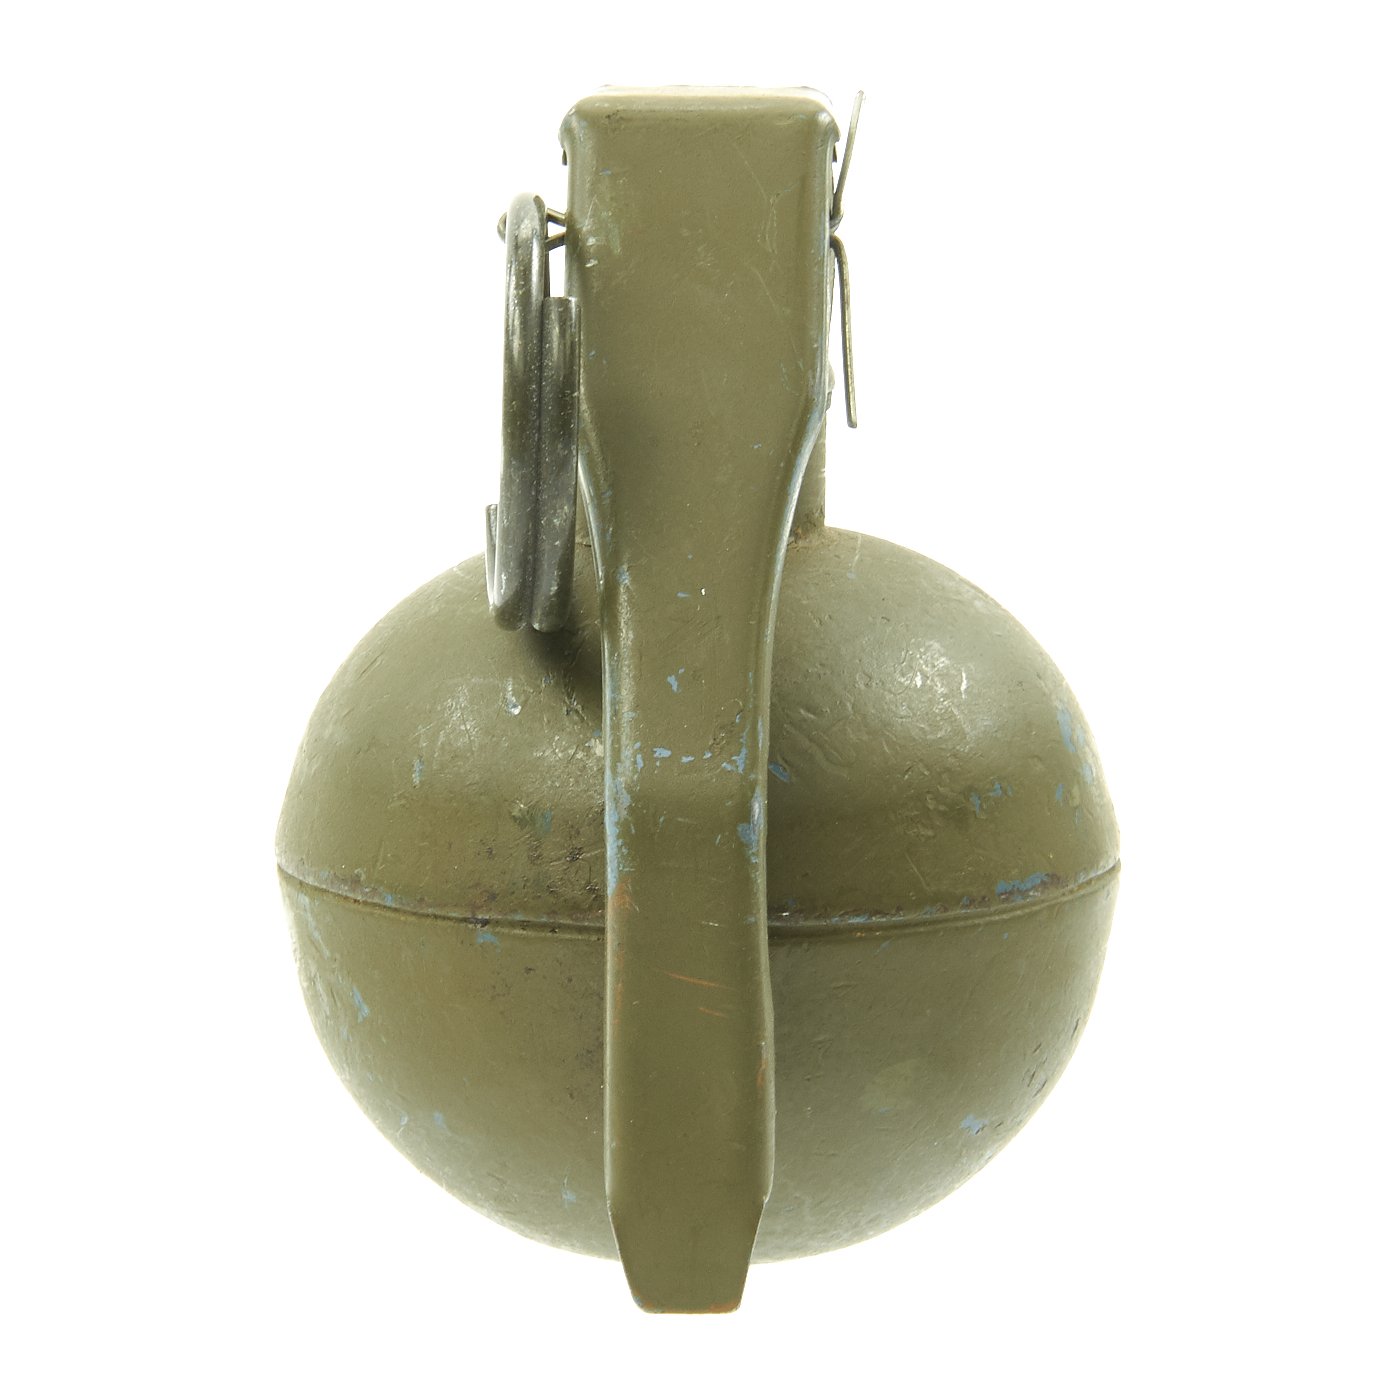 Original U.S. Vietnam War Era M69 Practice Fragmentation Hand Grenade ...